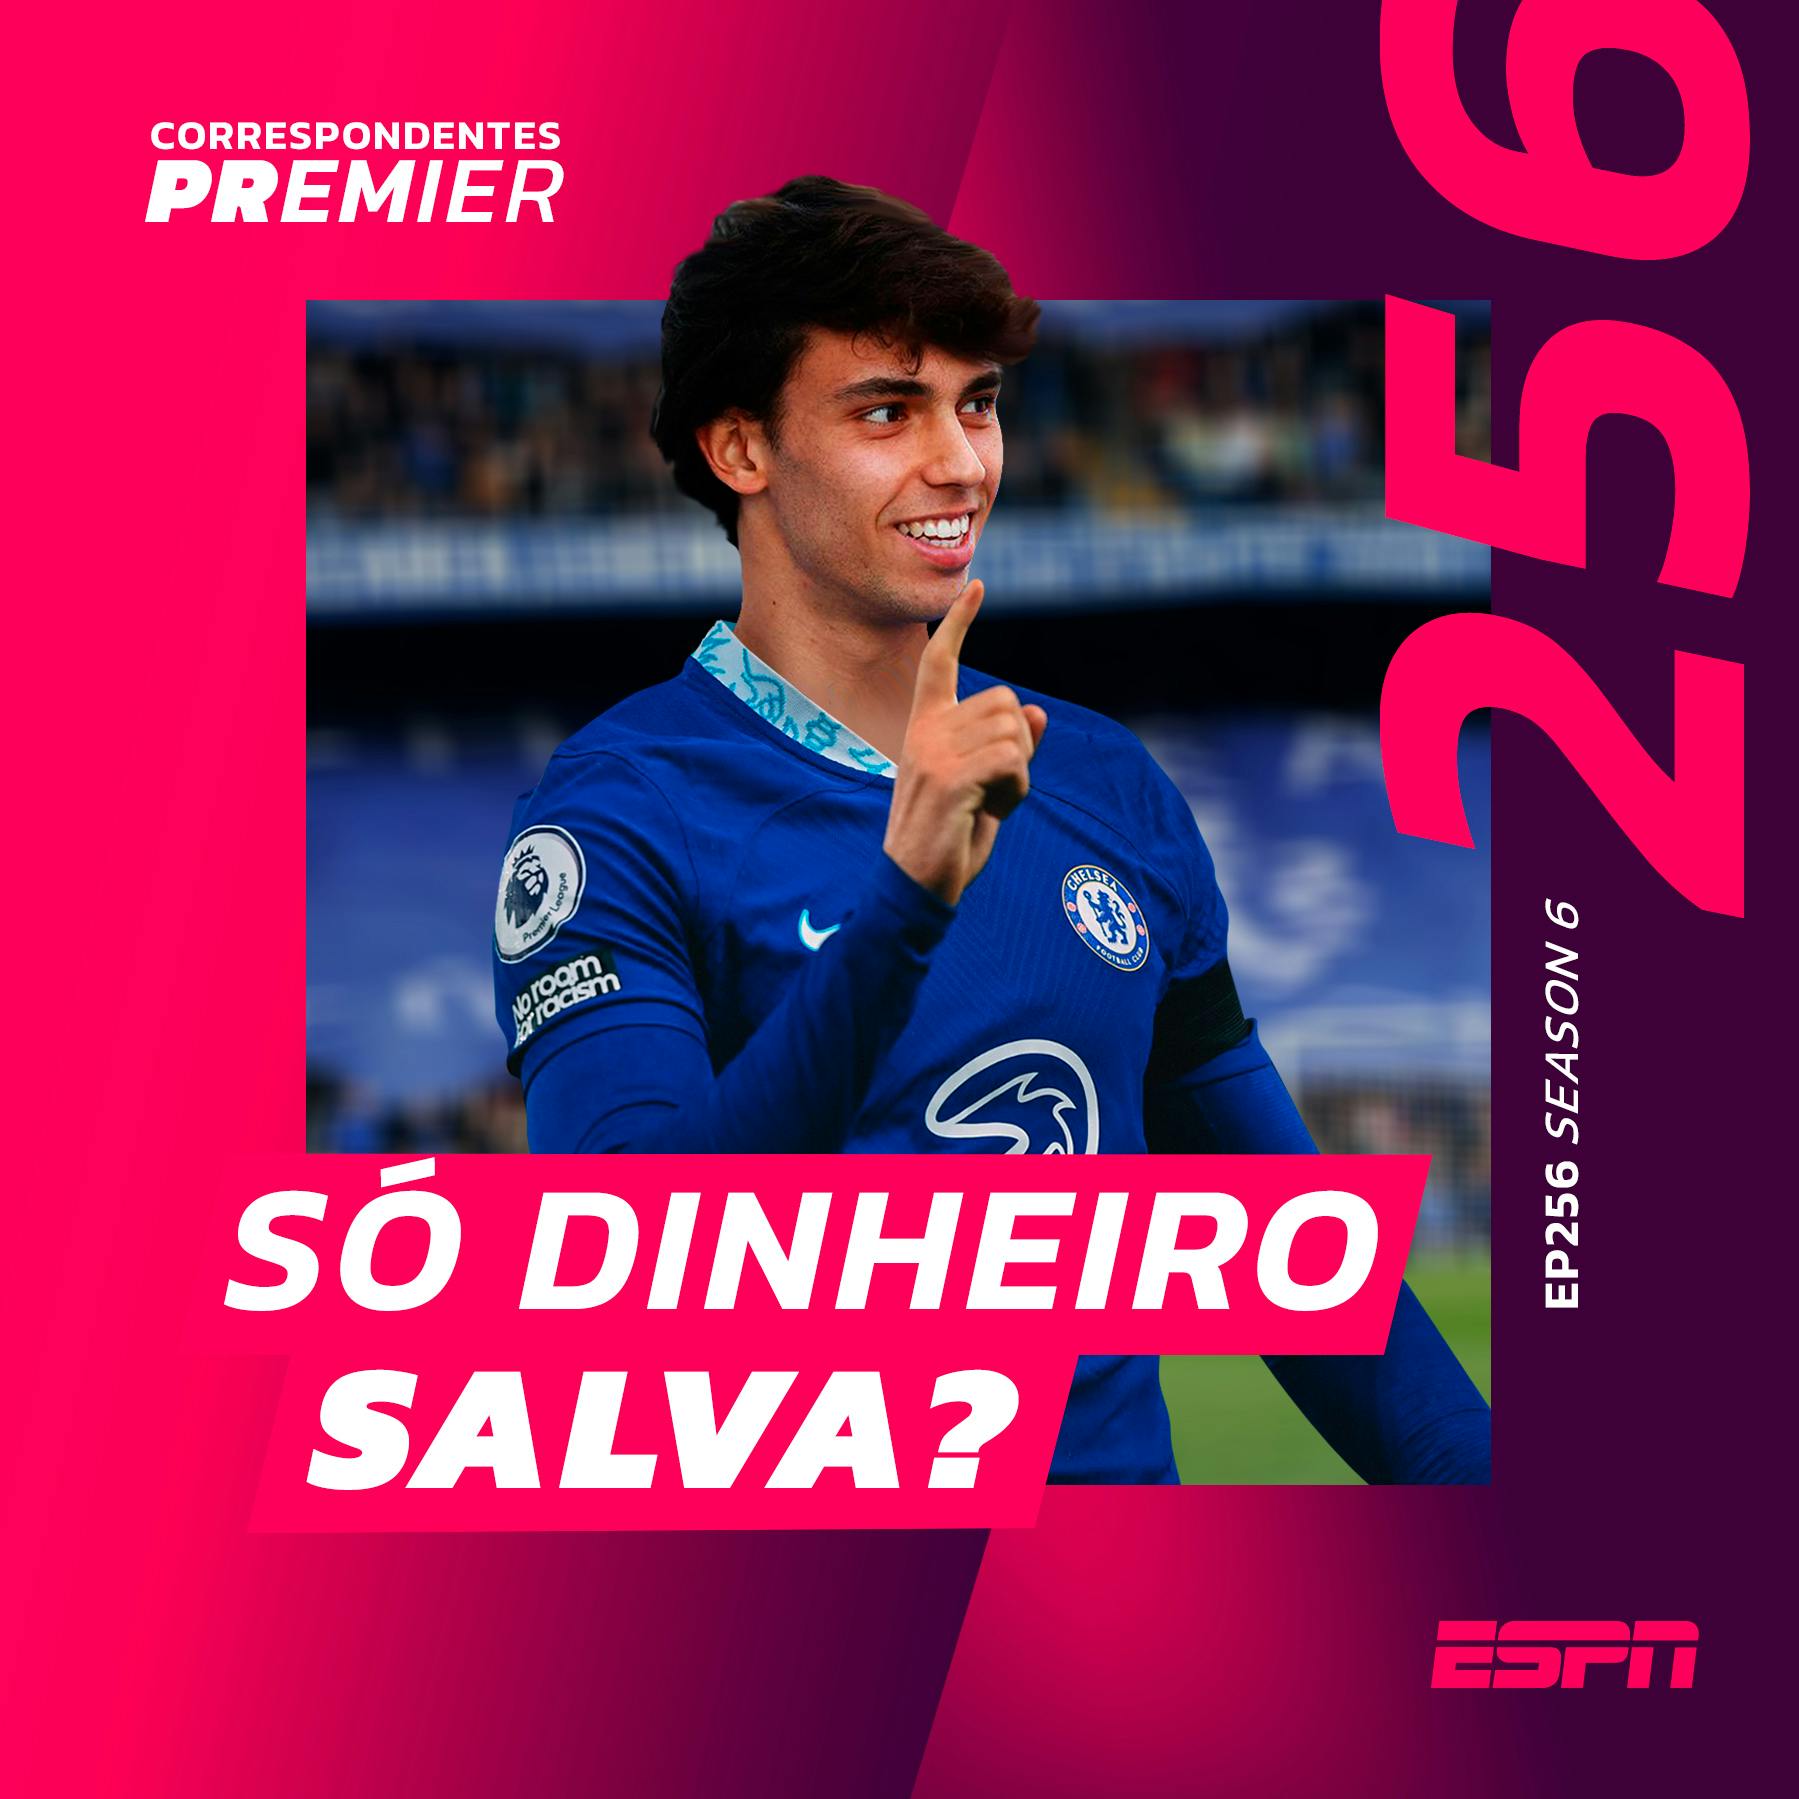 CORRESPONDENTES PREMIER #256: SÓ DINHEIRO SALVA?